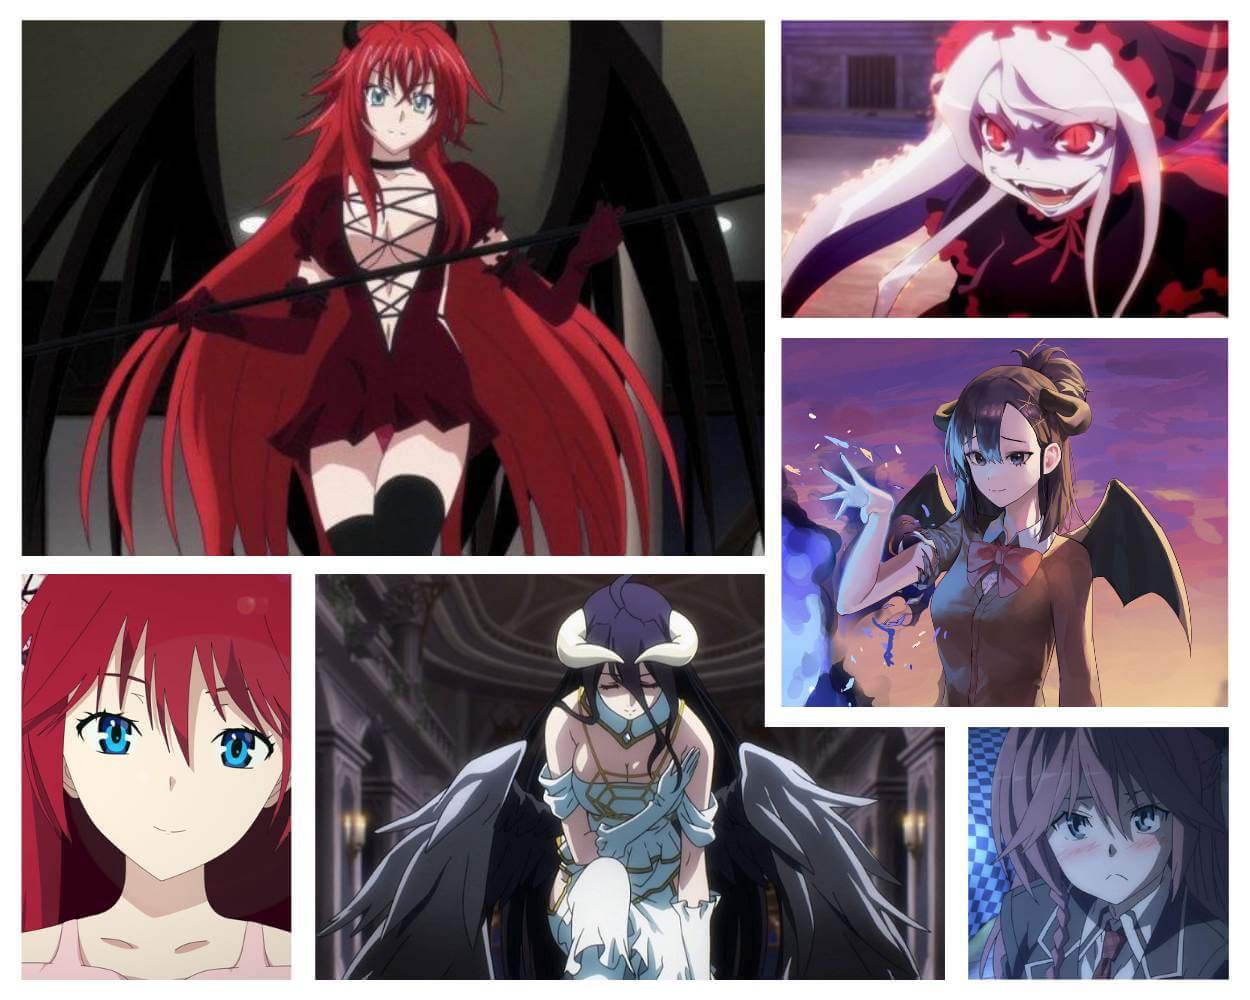 Female demon lord anime